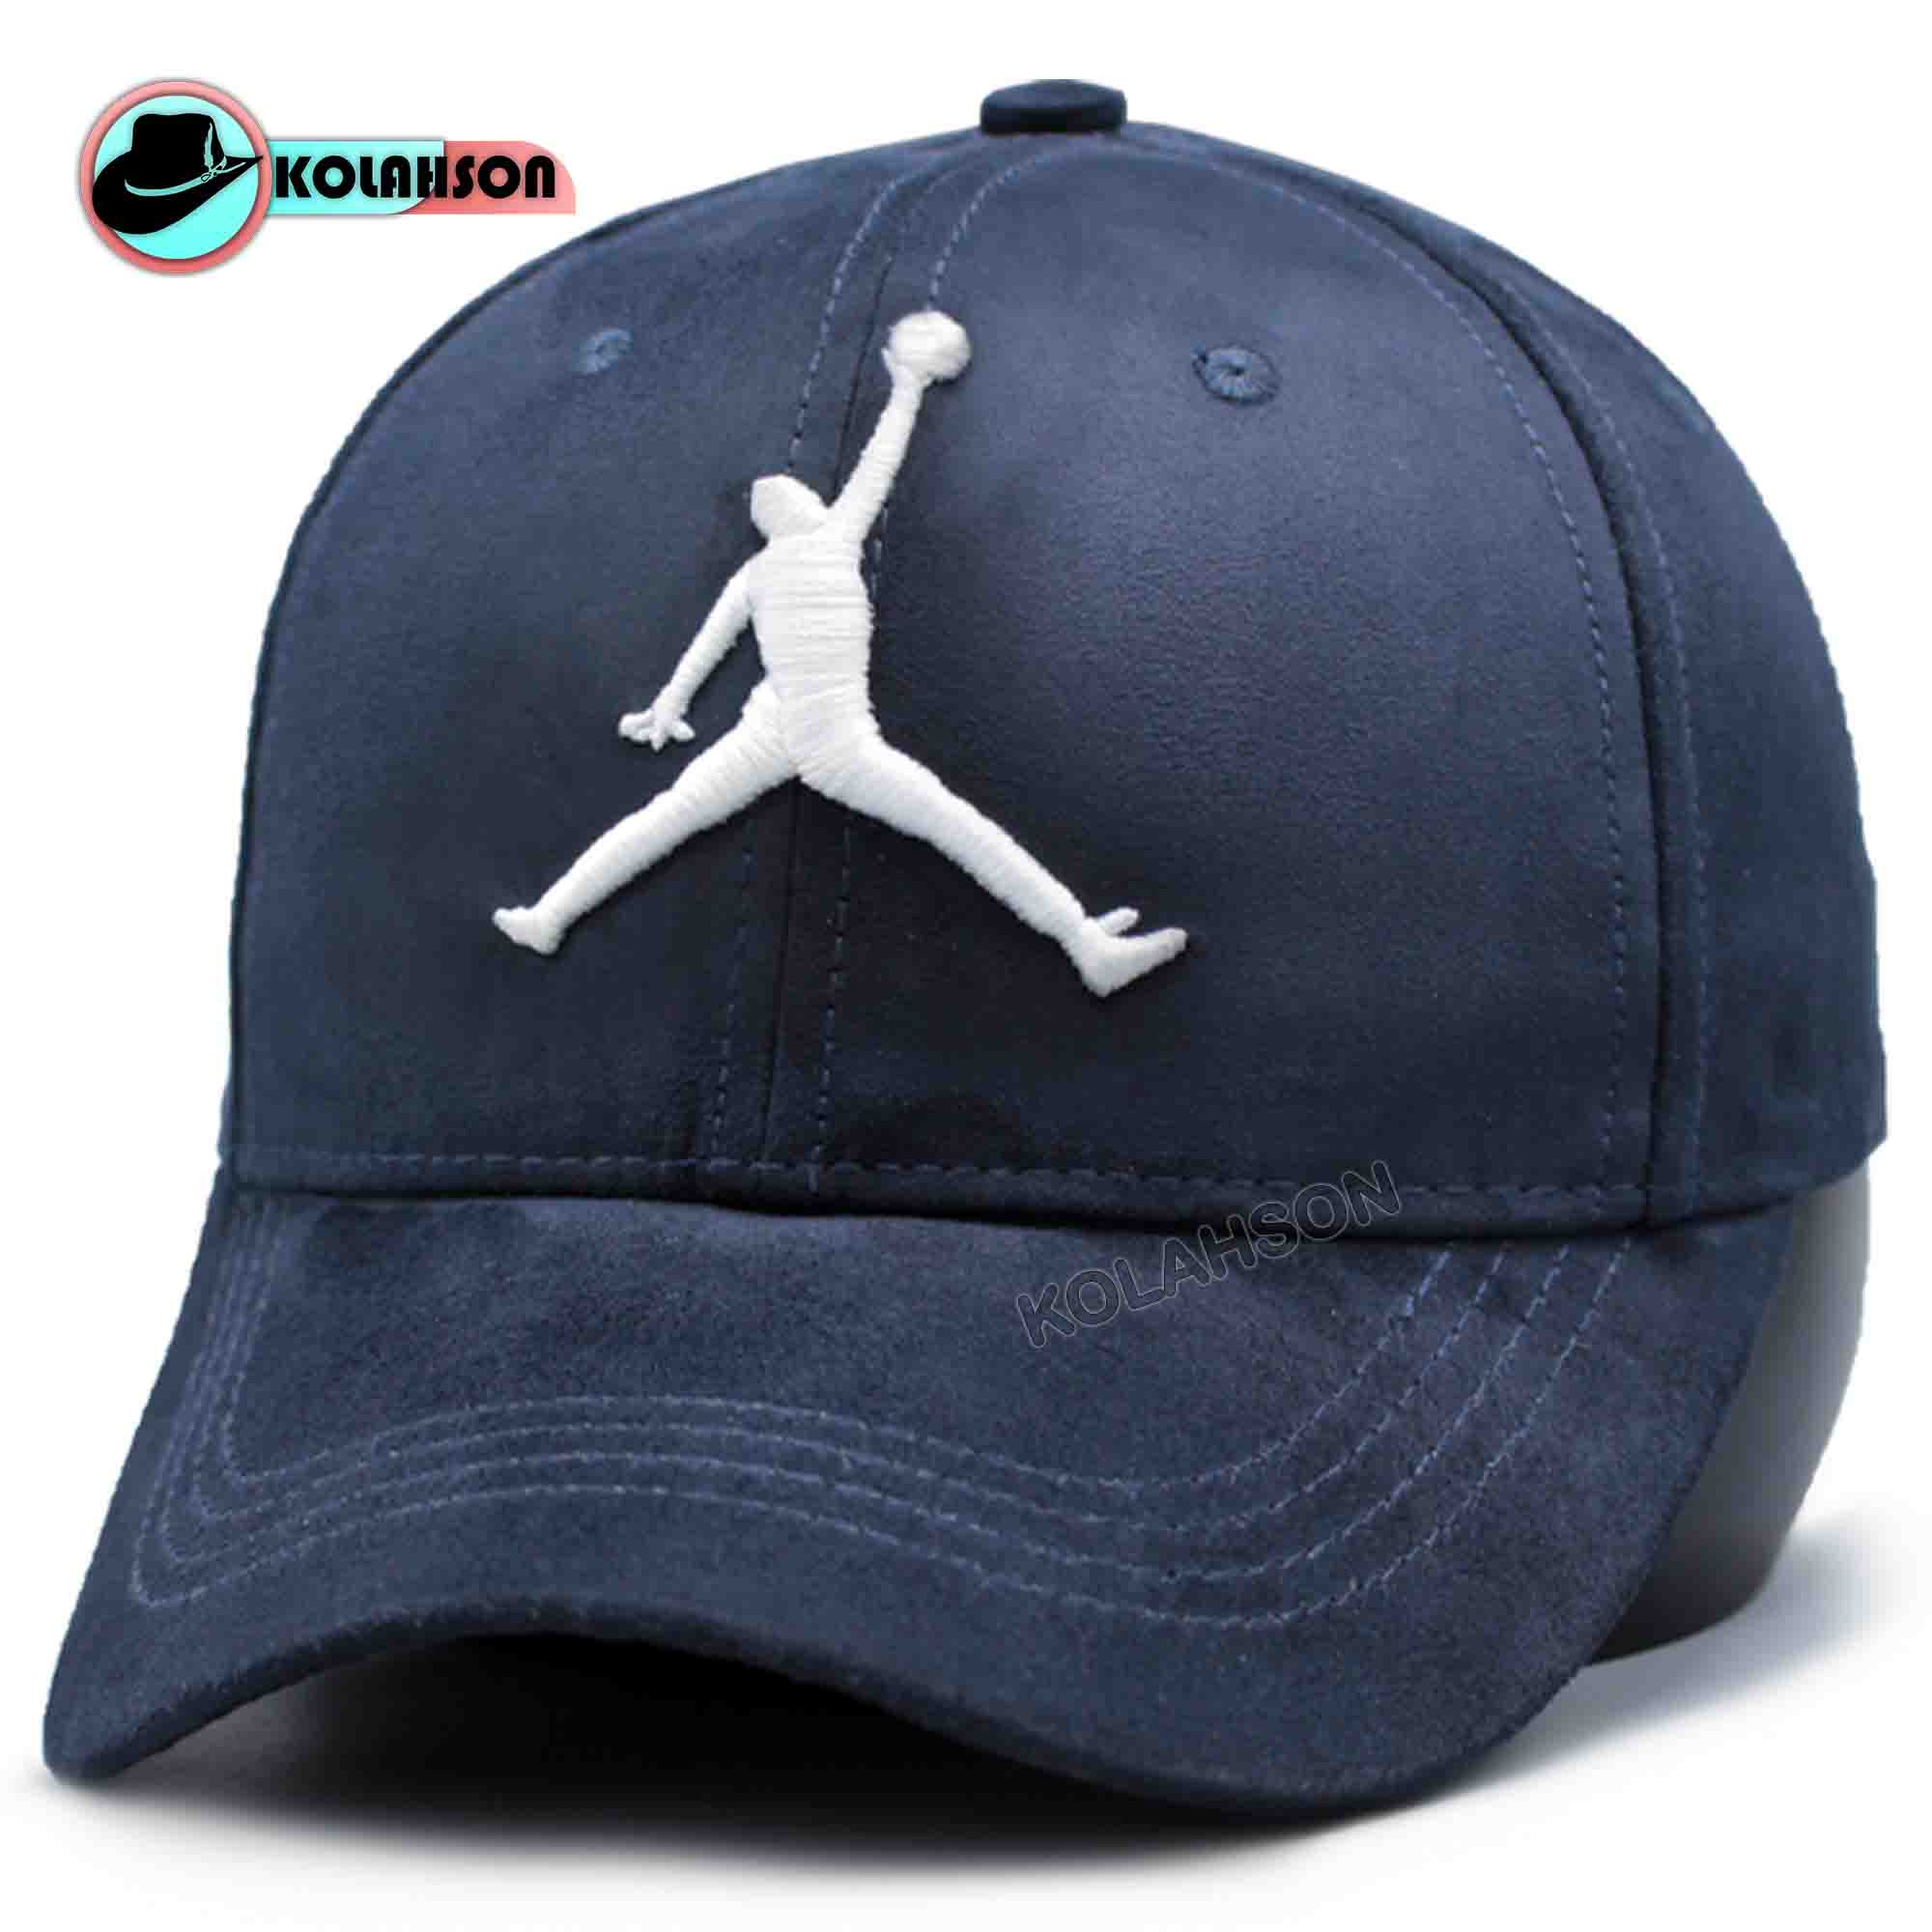 کلاه بیسبالی طرح Jordan با پارچه کتان